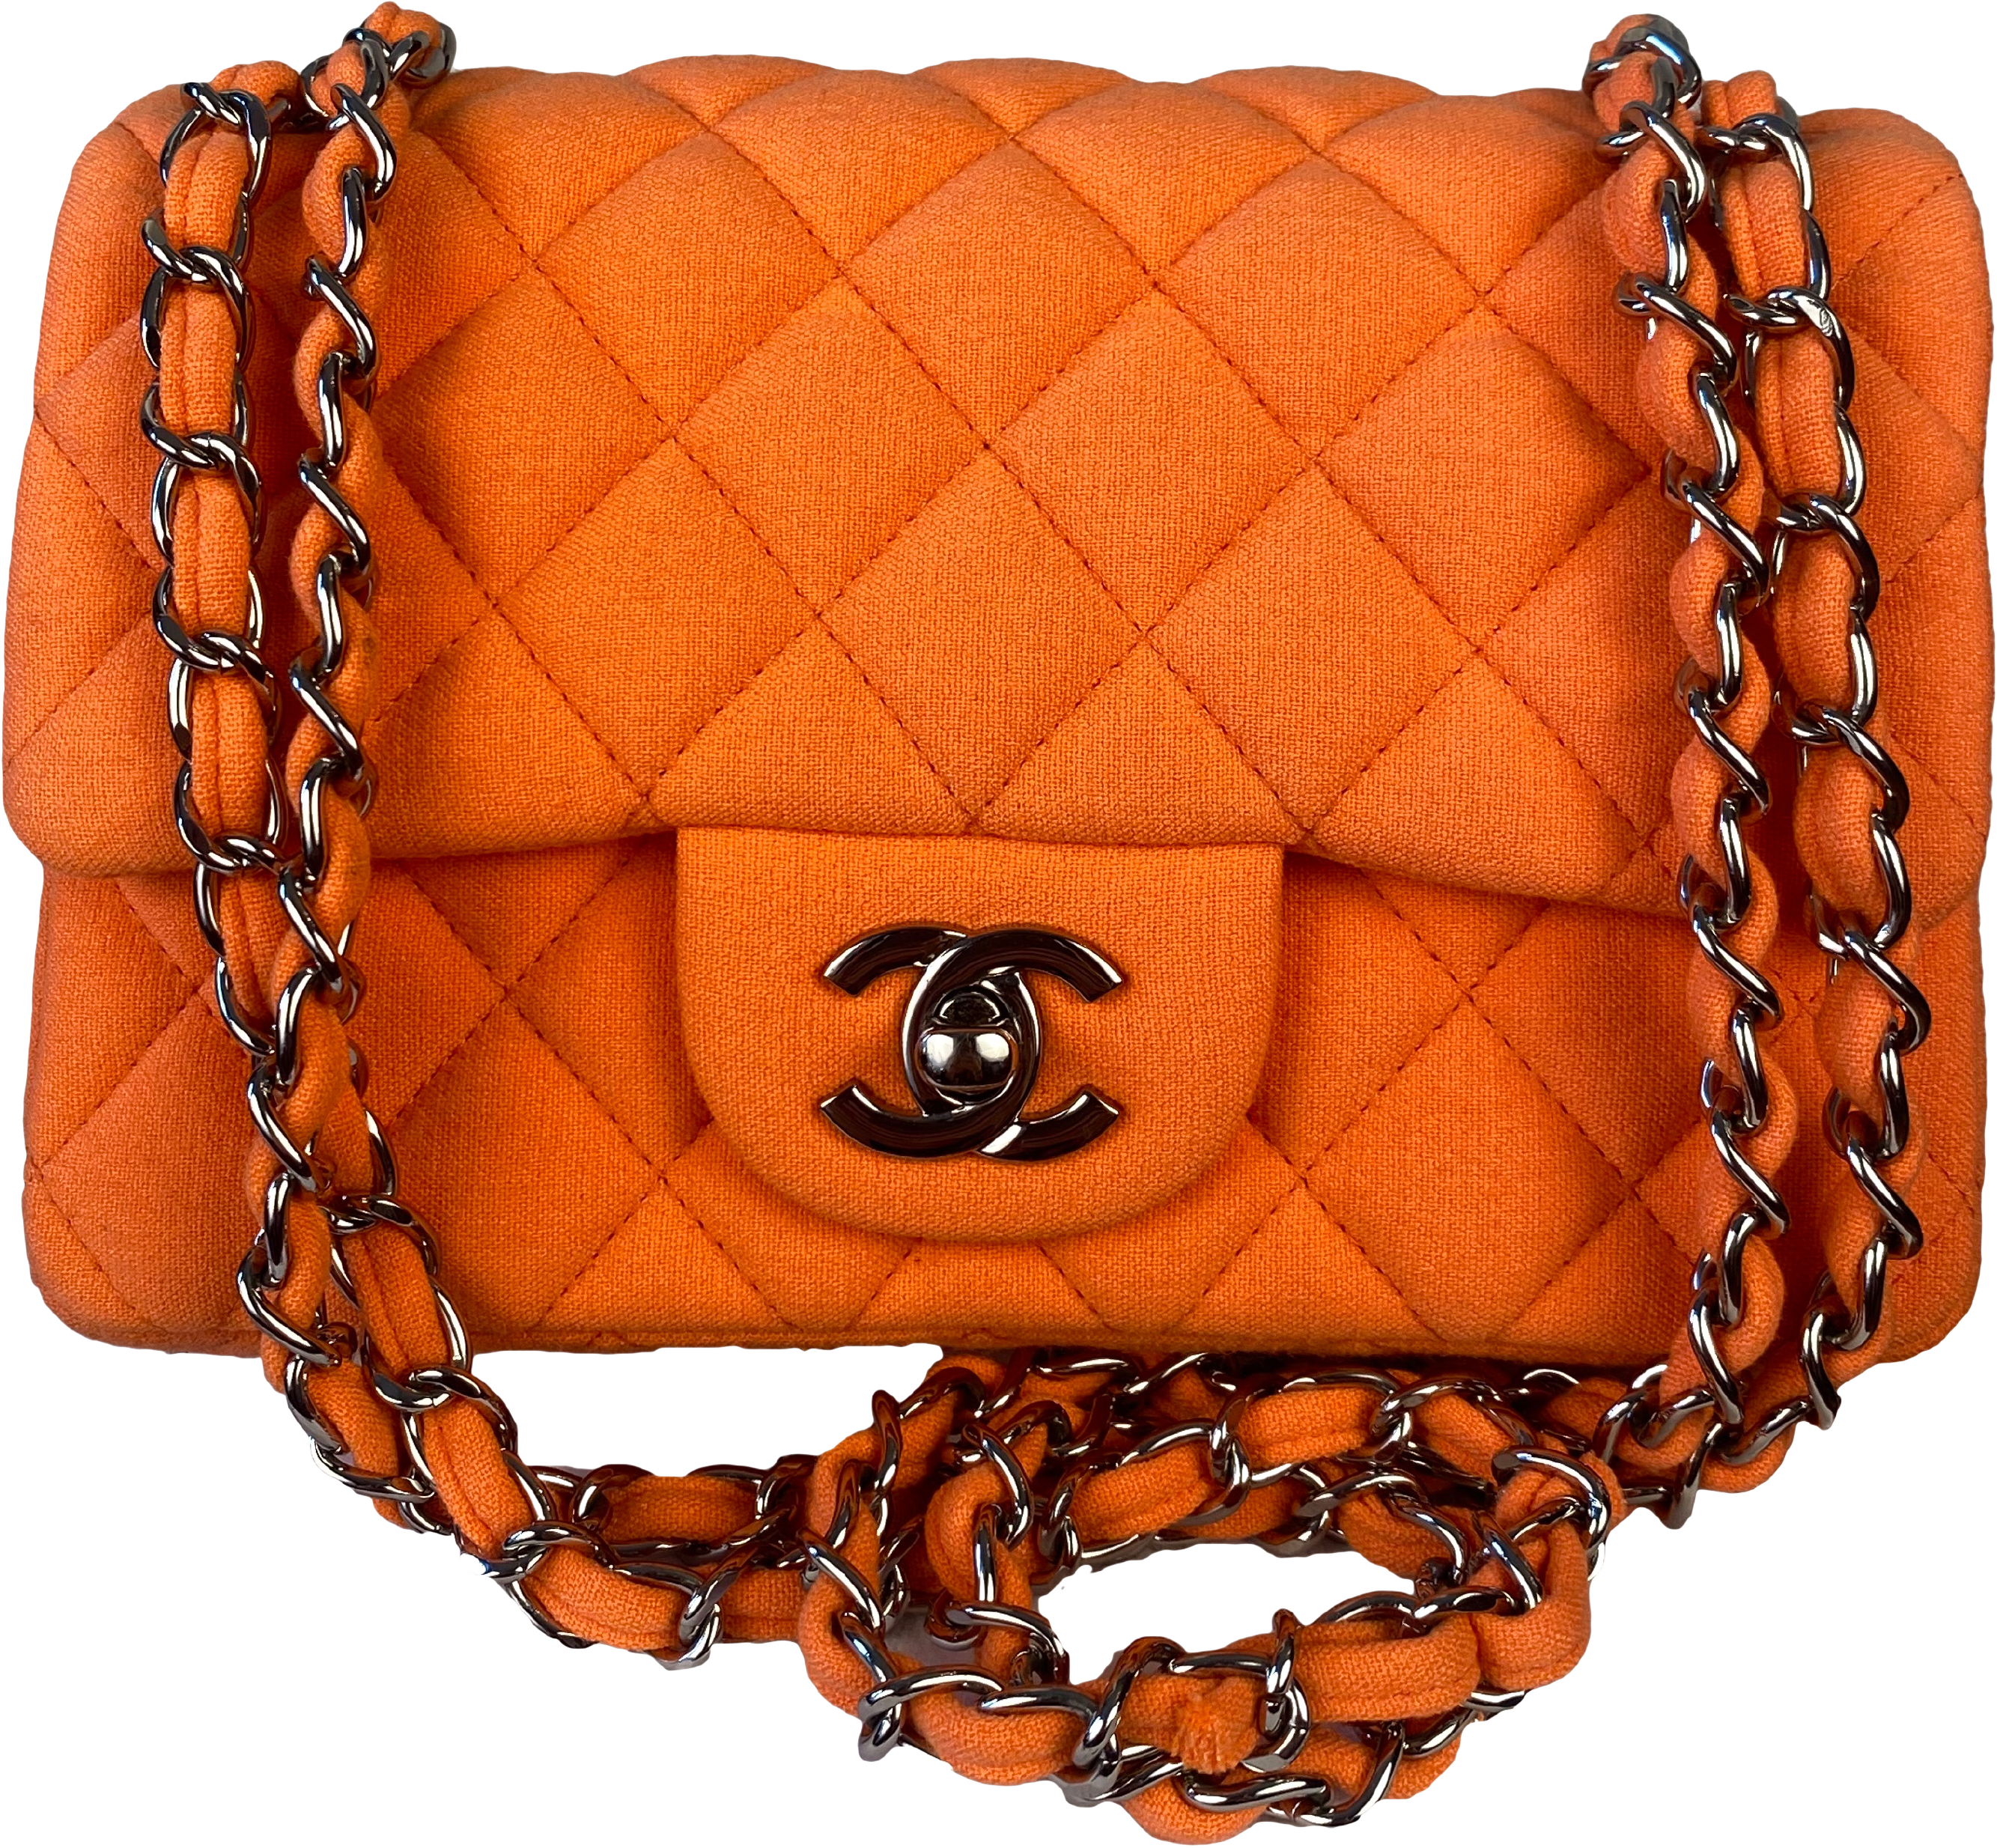 Chanel CC Classic Quilted Leather Flap Shoulder Bag Clutch Orange Gold  Shine NIB